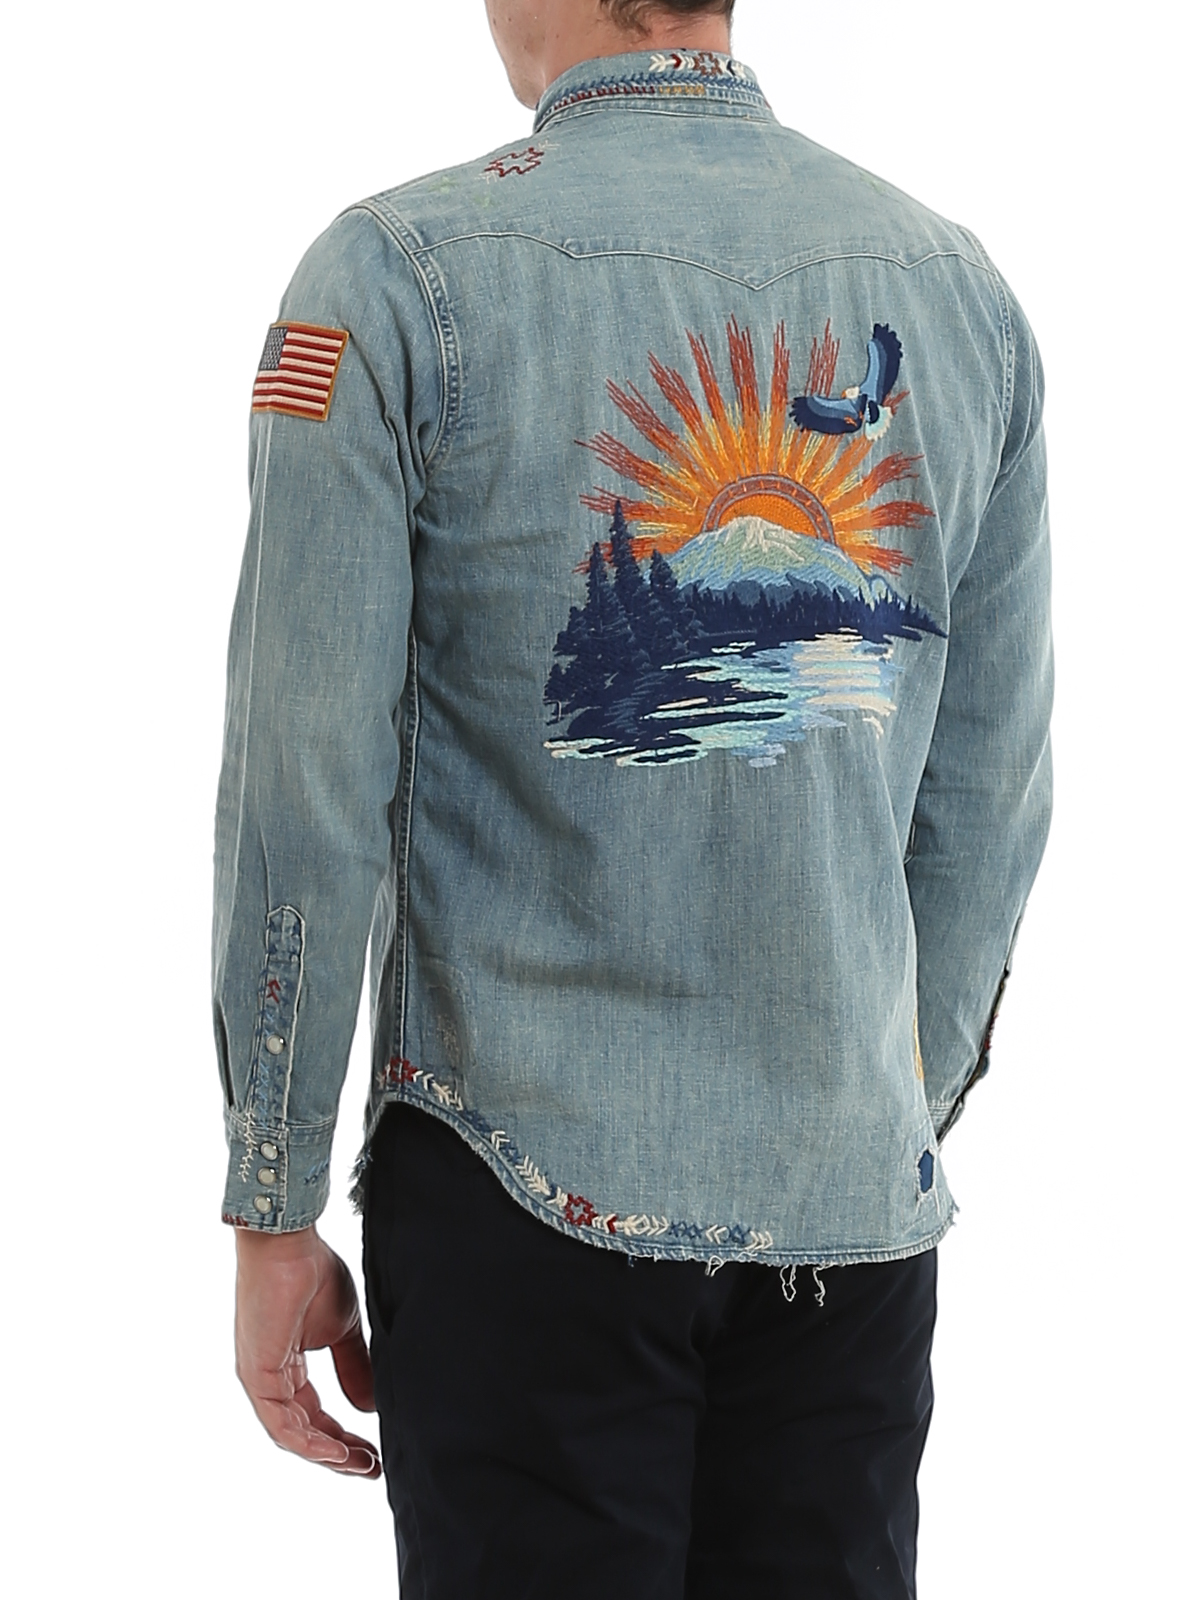 Vergelding spijsvertering Raffinaderij Shirts Polo Ralph Lauren - Western embroidery denim shirt - 710786275001